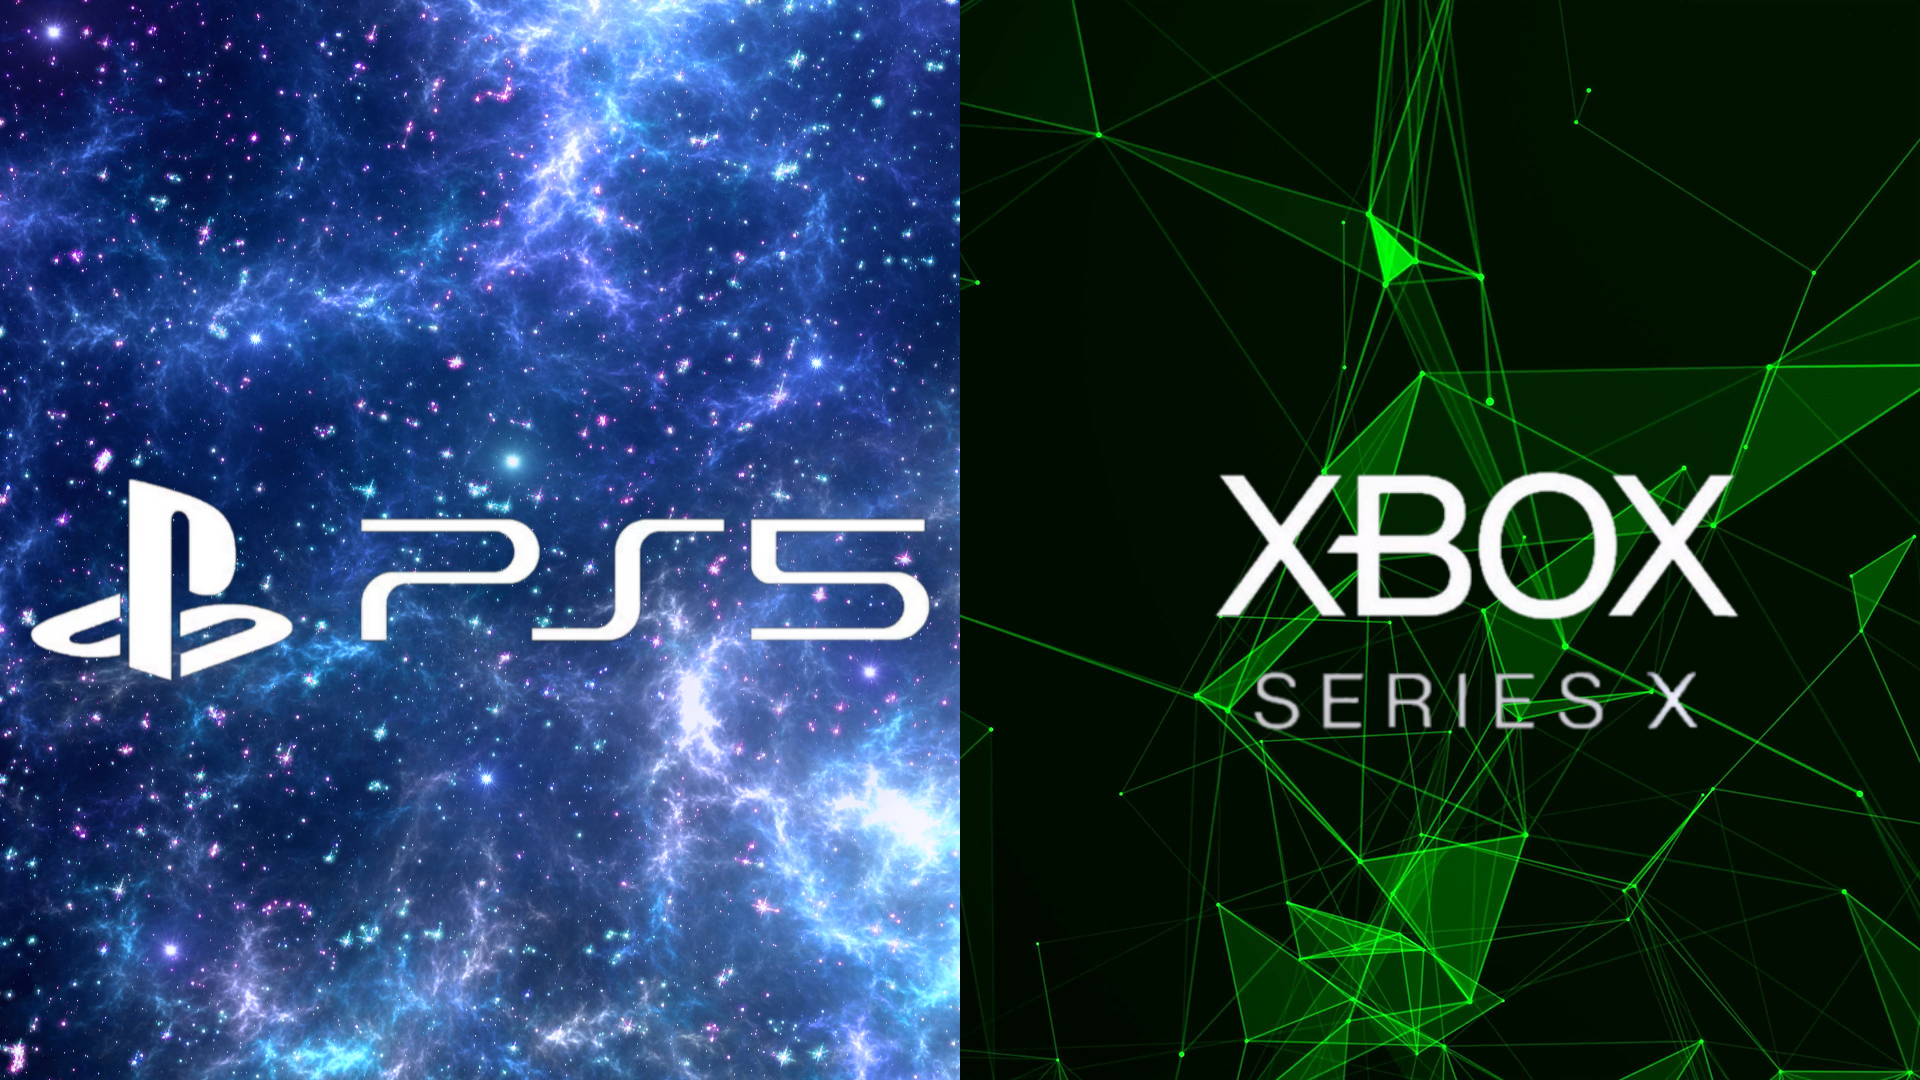 Xbox Series X Game Microsoft XSX New Concept Art Design Logo ps5 next gen generation ps4 playstation 5 4